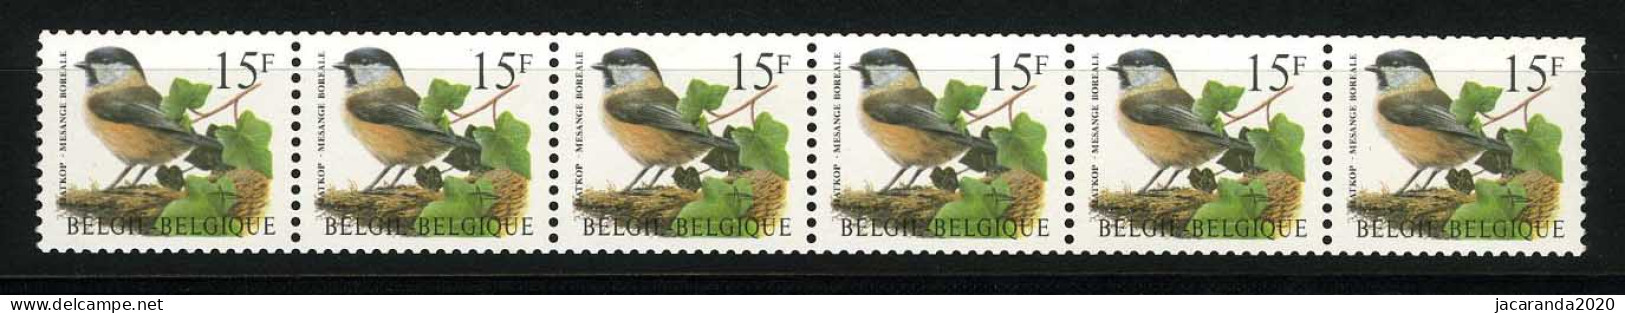 België R81a - Vogels - Oiseaux - Buzin (2732) - Strook Van 6 ZONDER NUMMER - SANS NUMERO - ZELDZAAM - RARE - Rollen